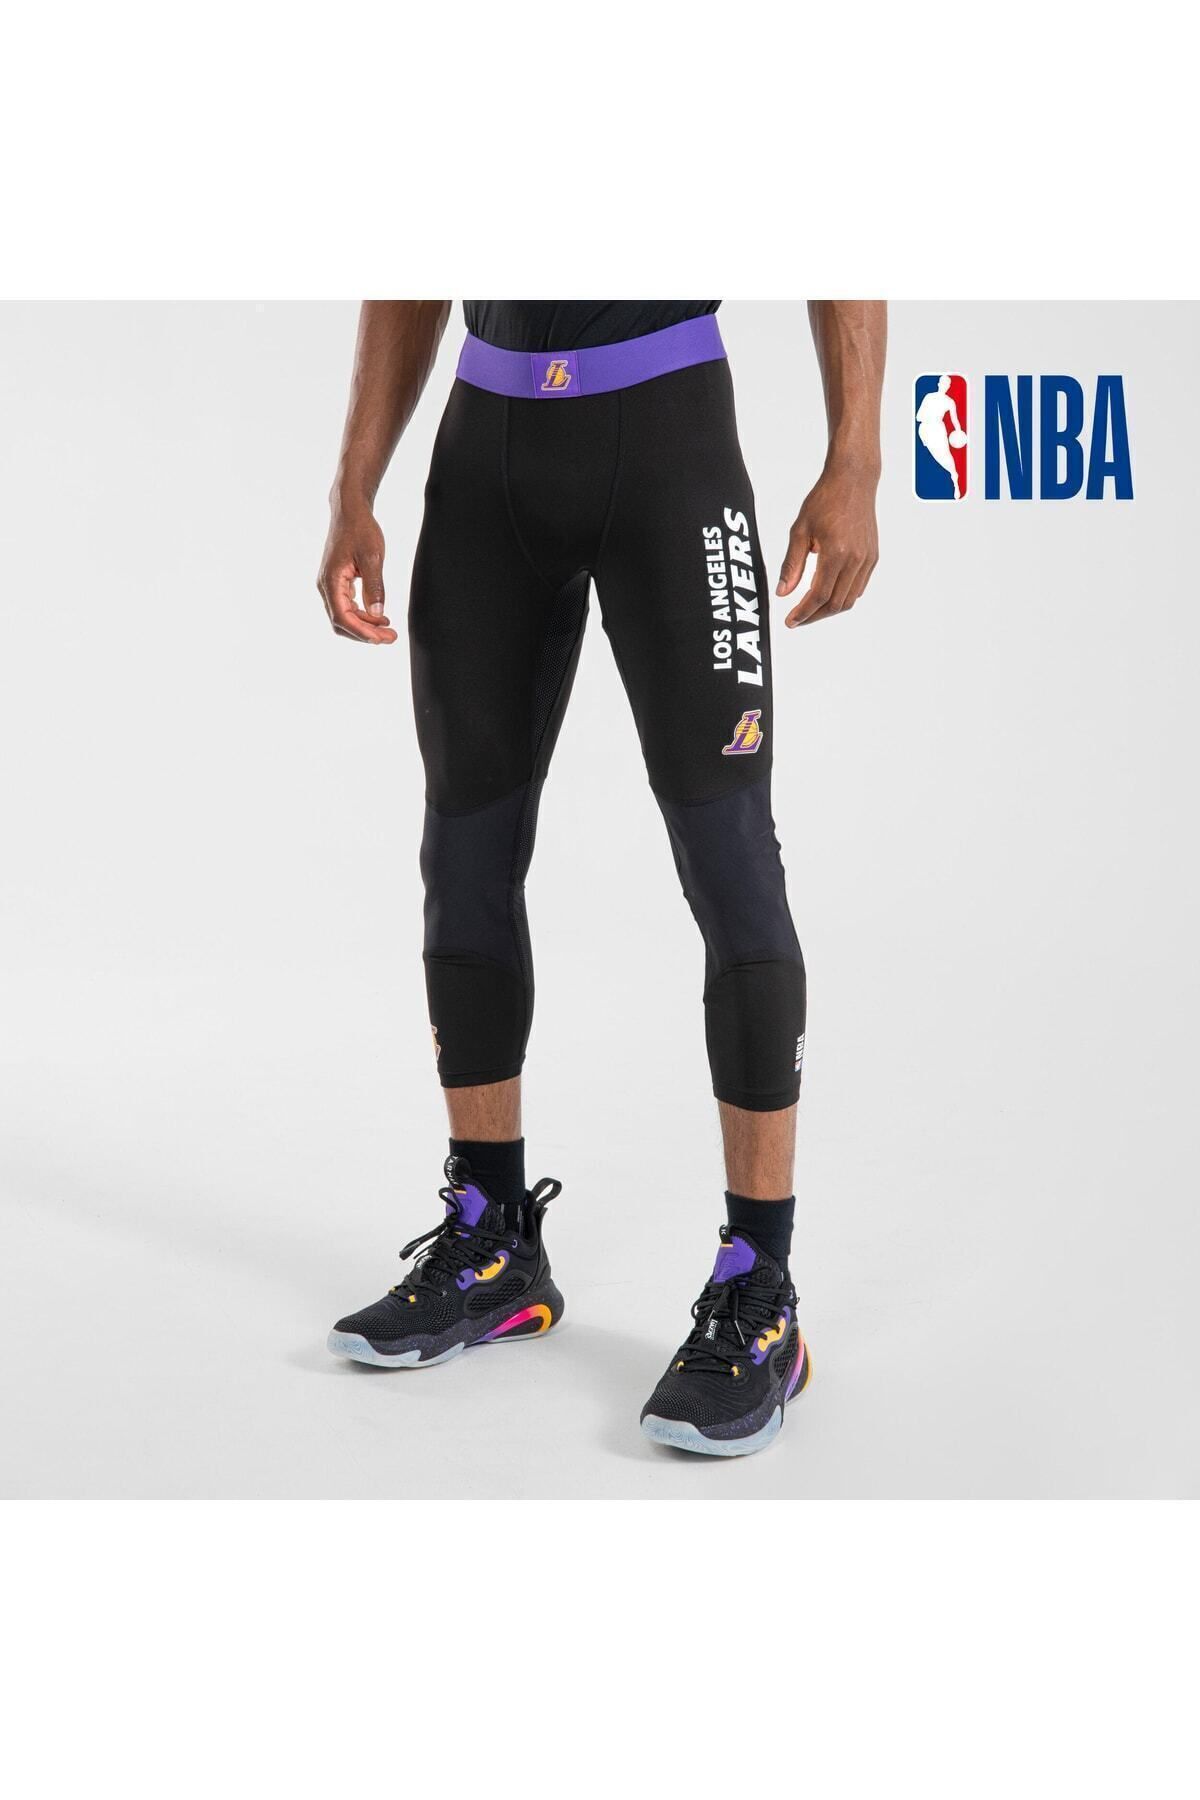 Decathlon Tarmak Nba Los Angeles Lakers Yetişkin 3/4 Basketbol Taytı - Siyah - 500